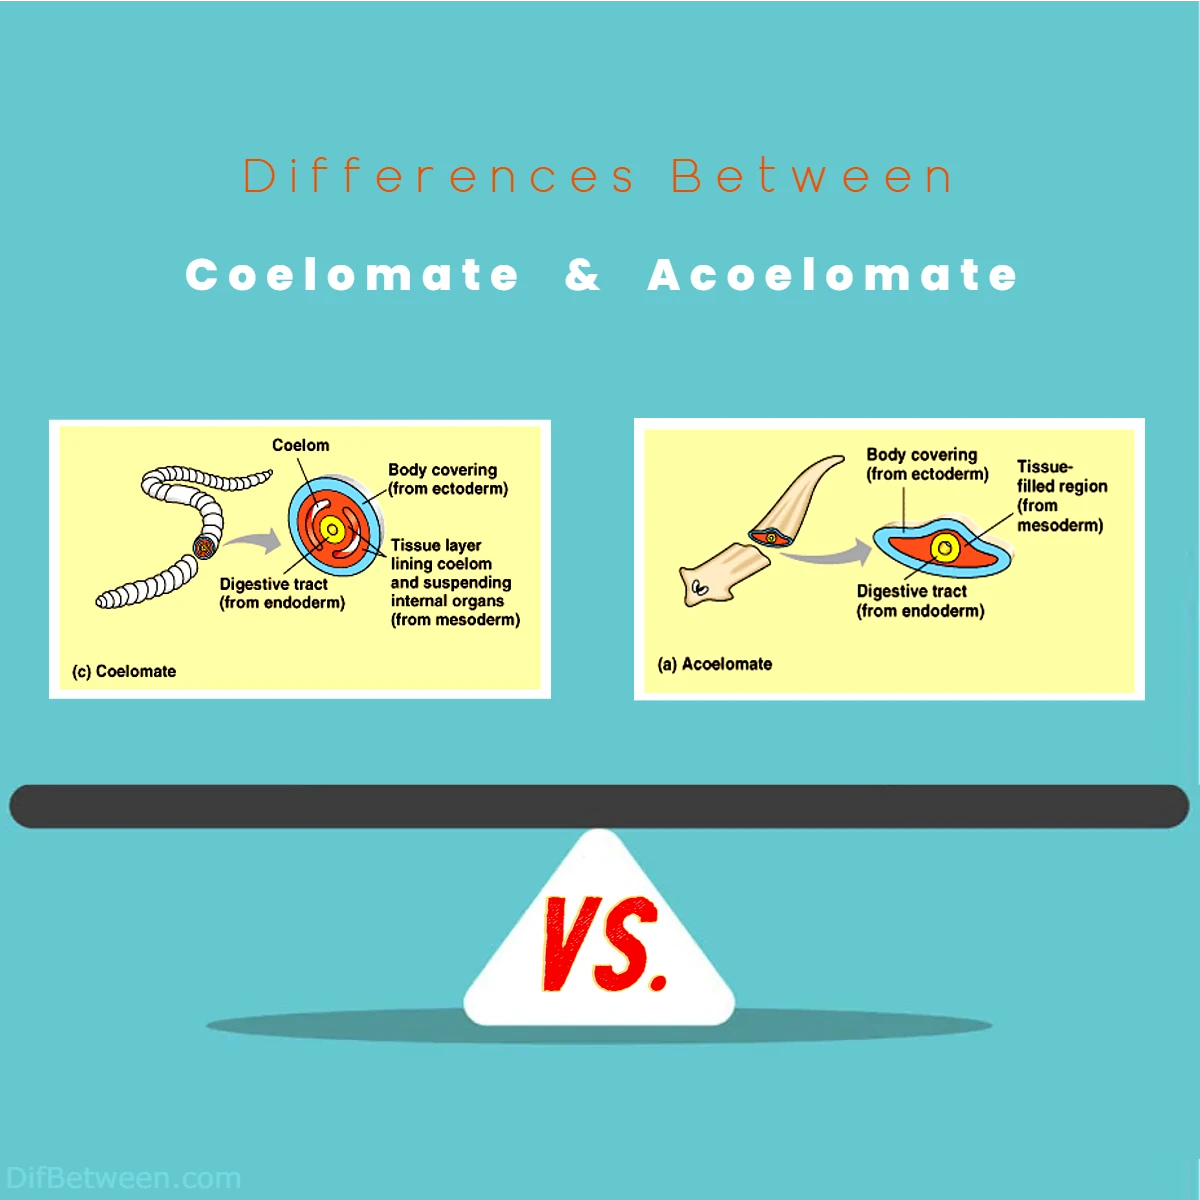 Differences Between Coelomate vs Acoelomate